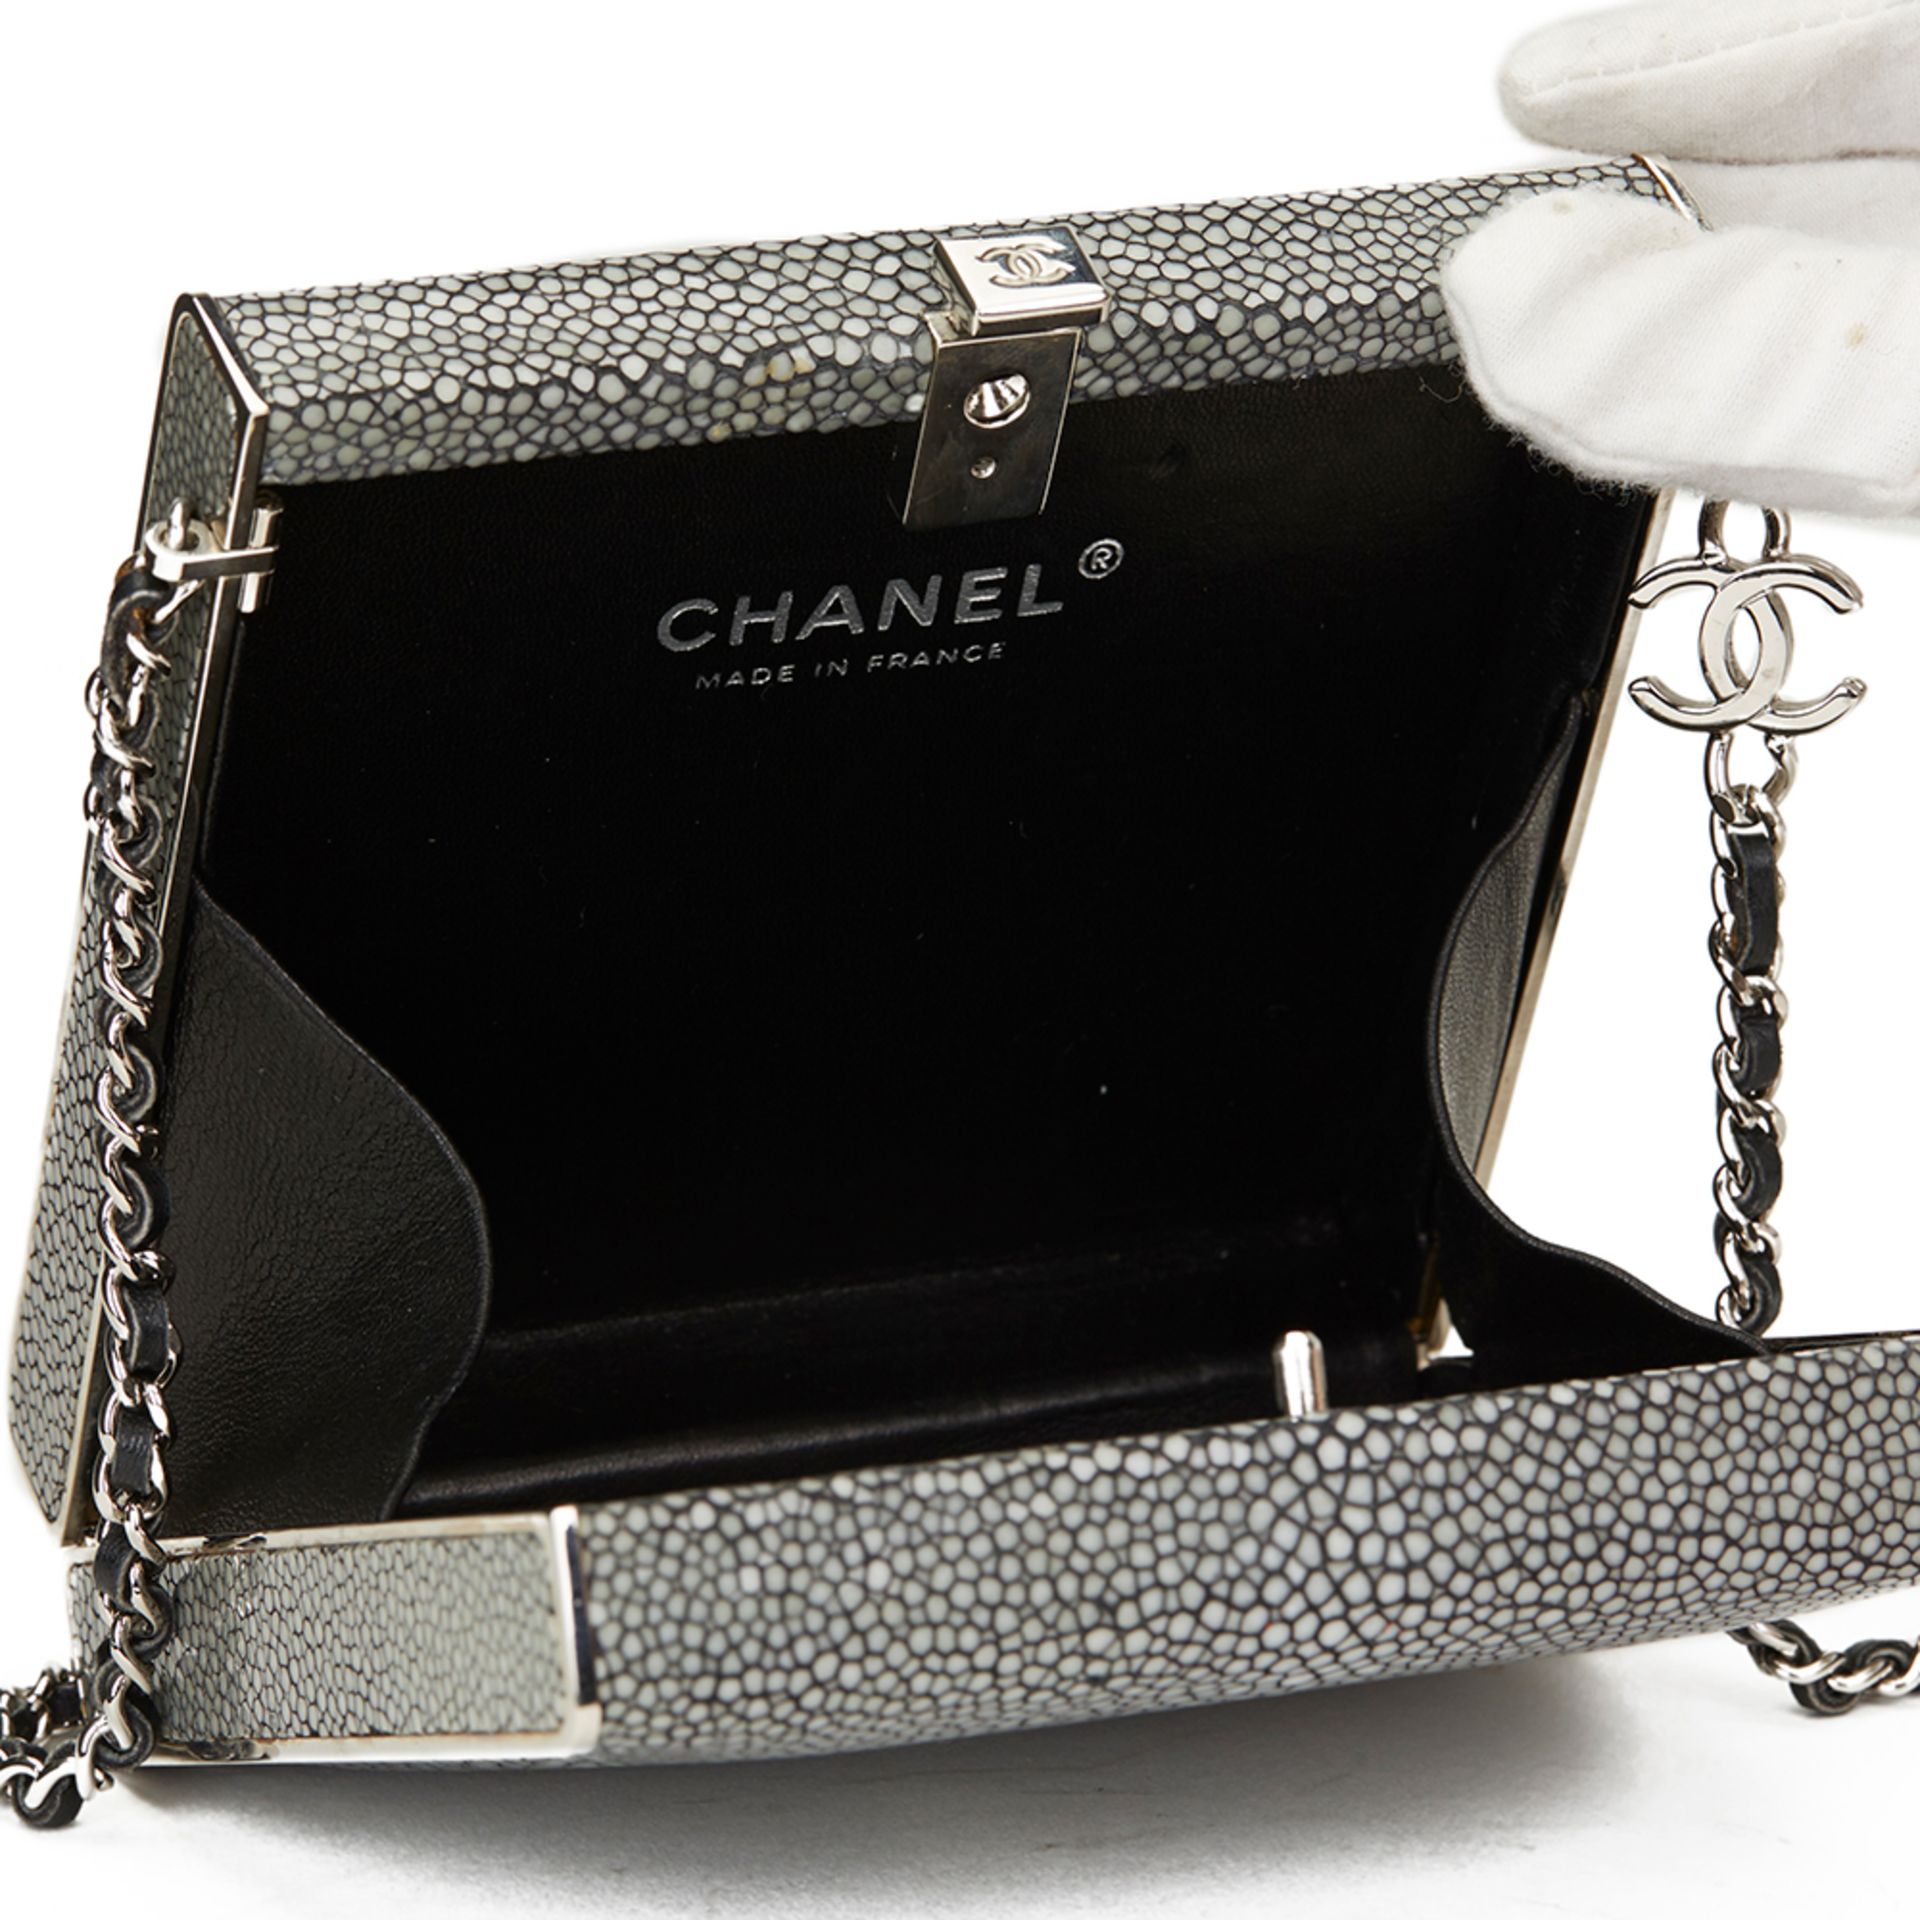 Chanel Box Minaudiere - Image 9 of 9